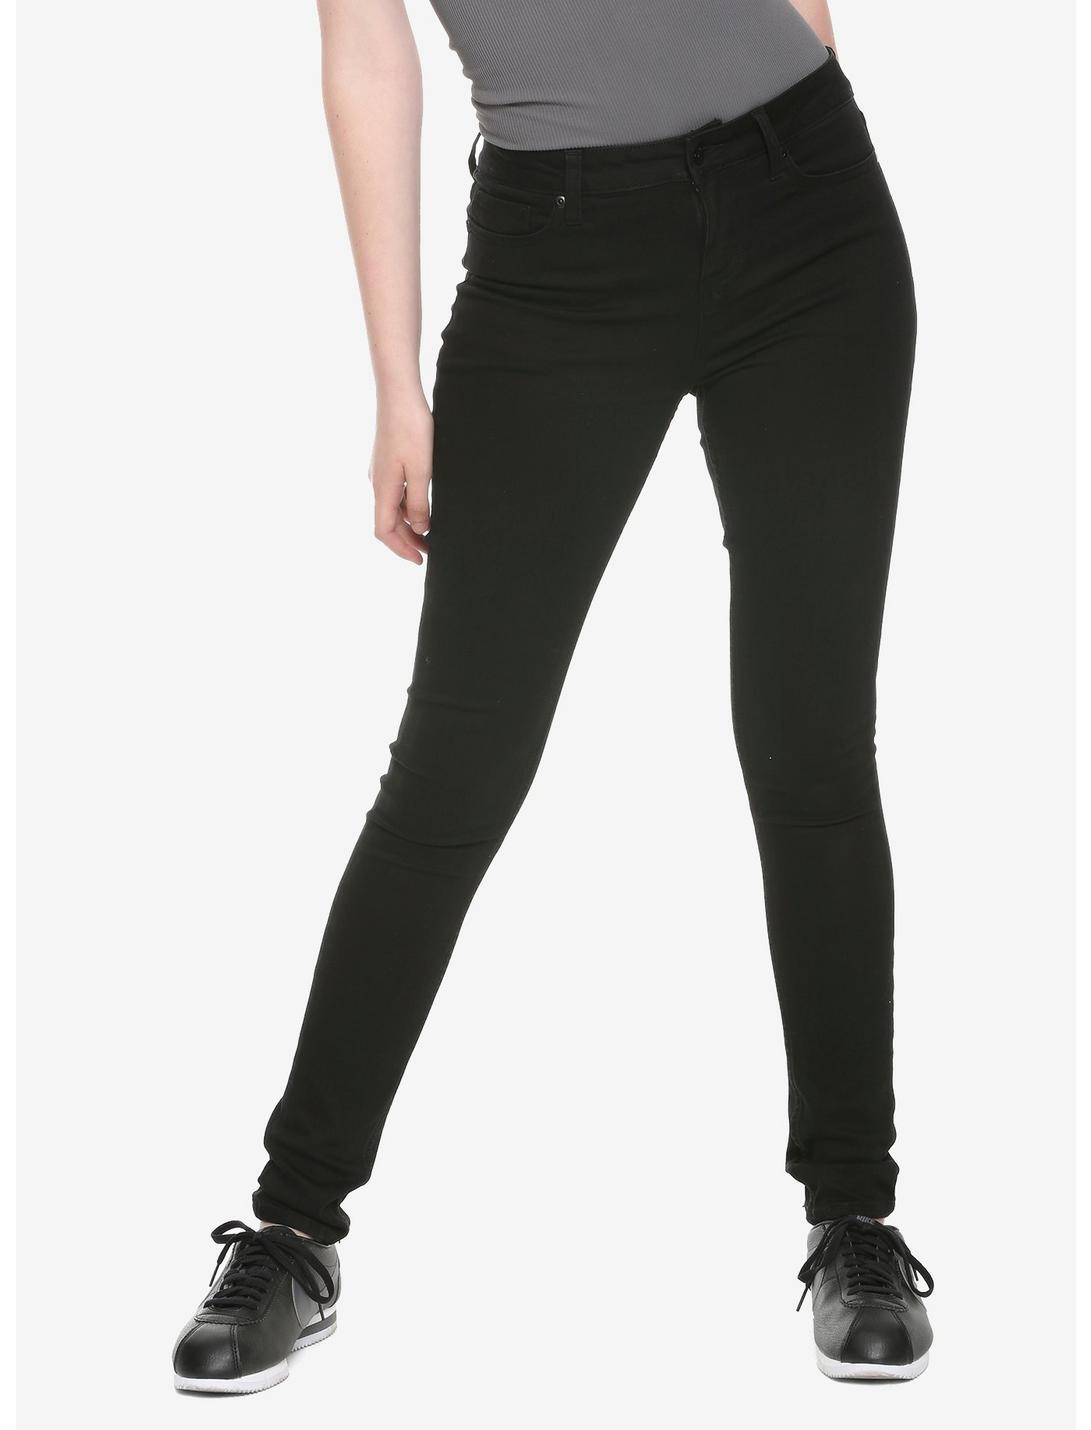 HT Denim Black Low-Rise Skinny Jeans, BLACK, hi-res